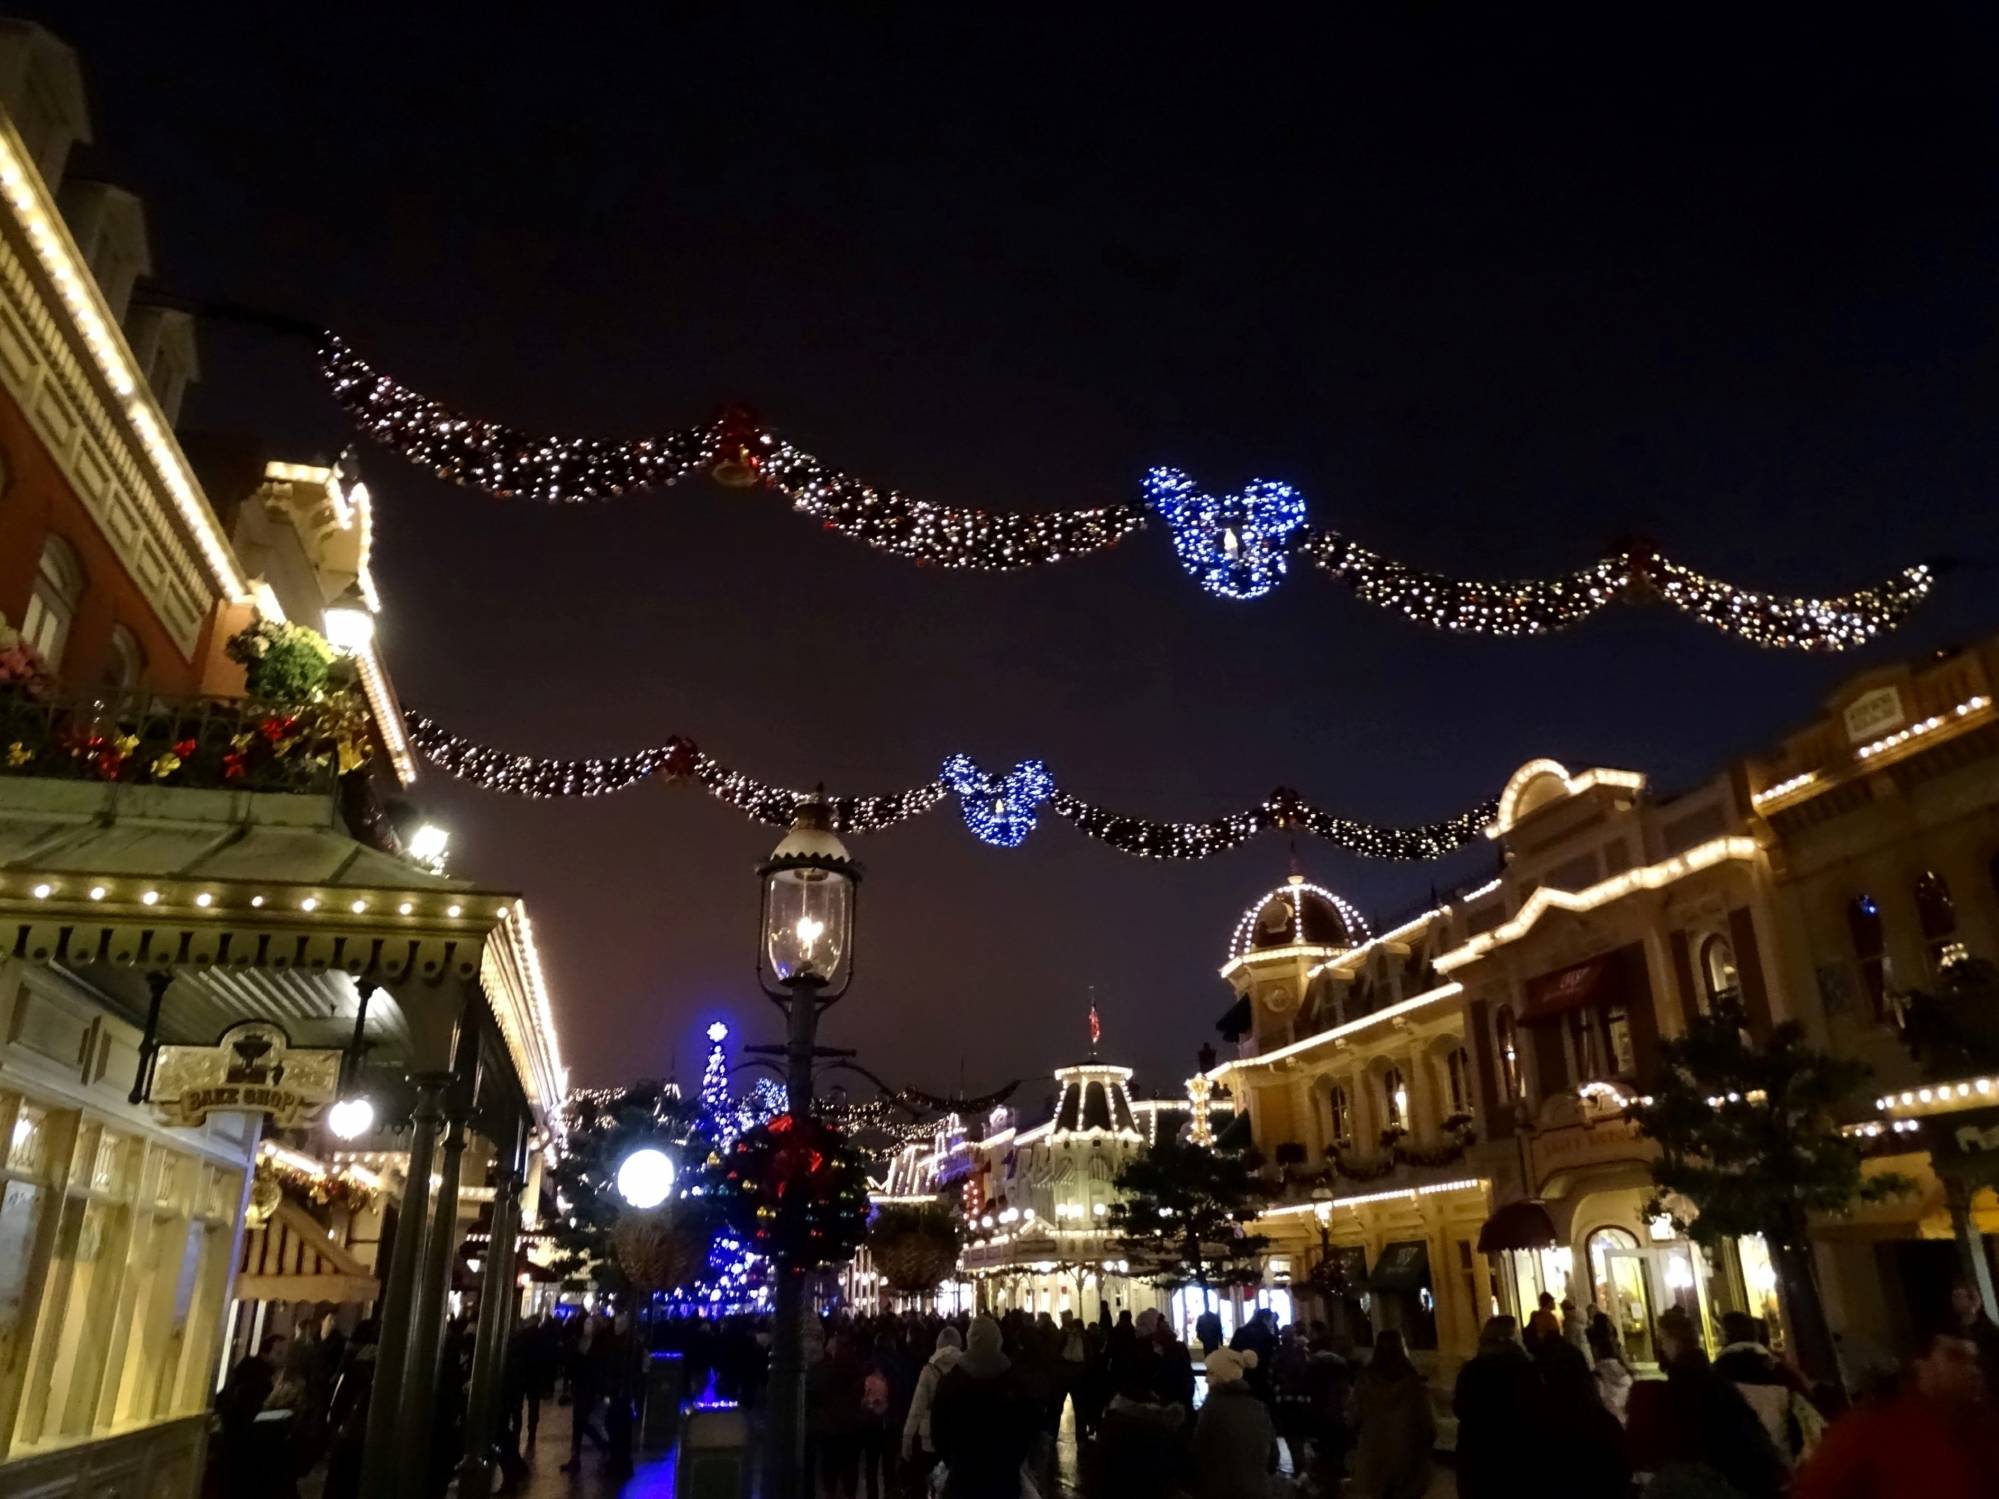 Disneyland Paris - Christmas decorations along Main Street USA